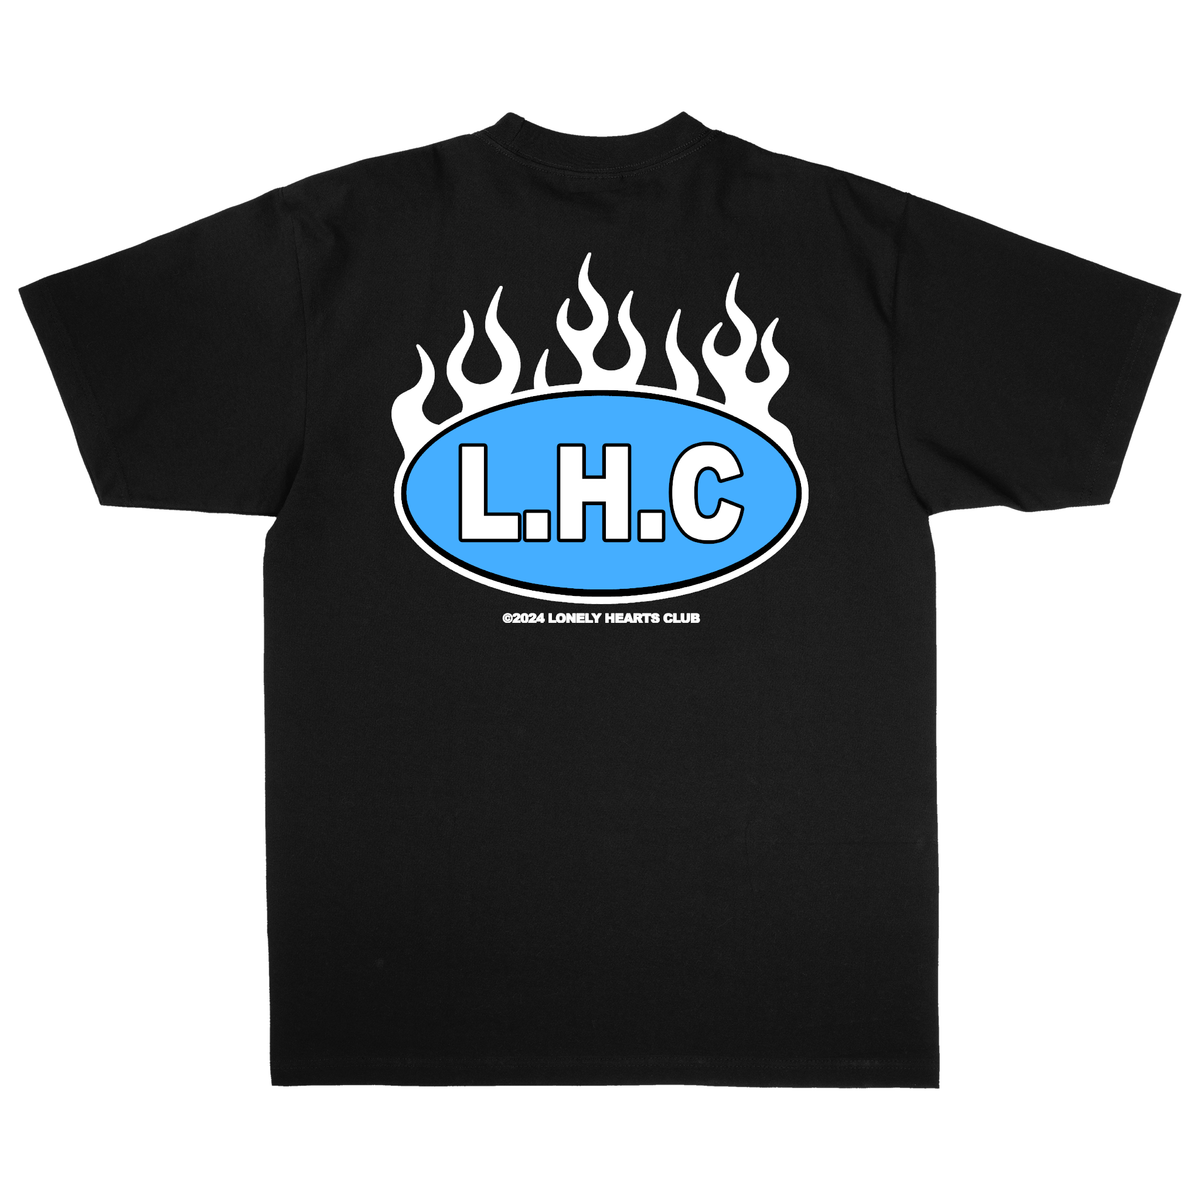 Lonely Hearts Club Hell Club T-shirt